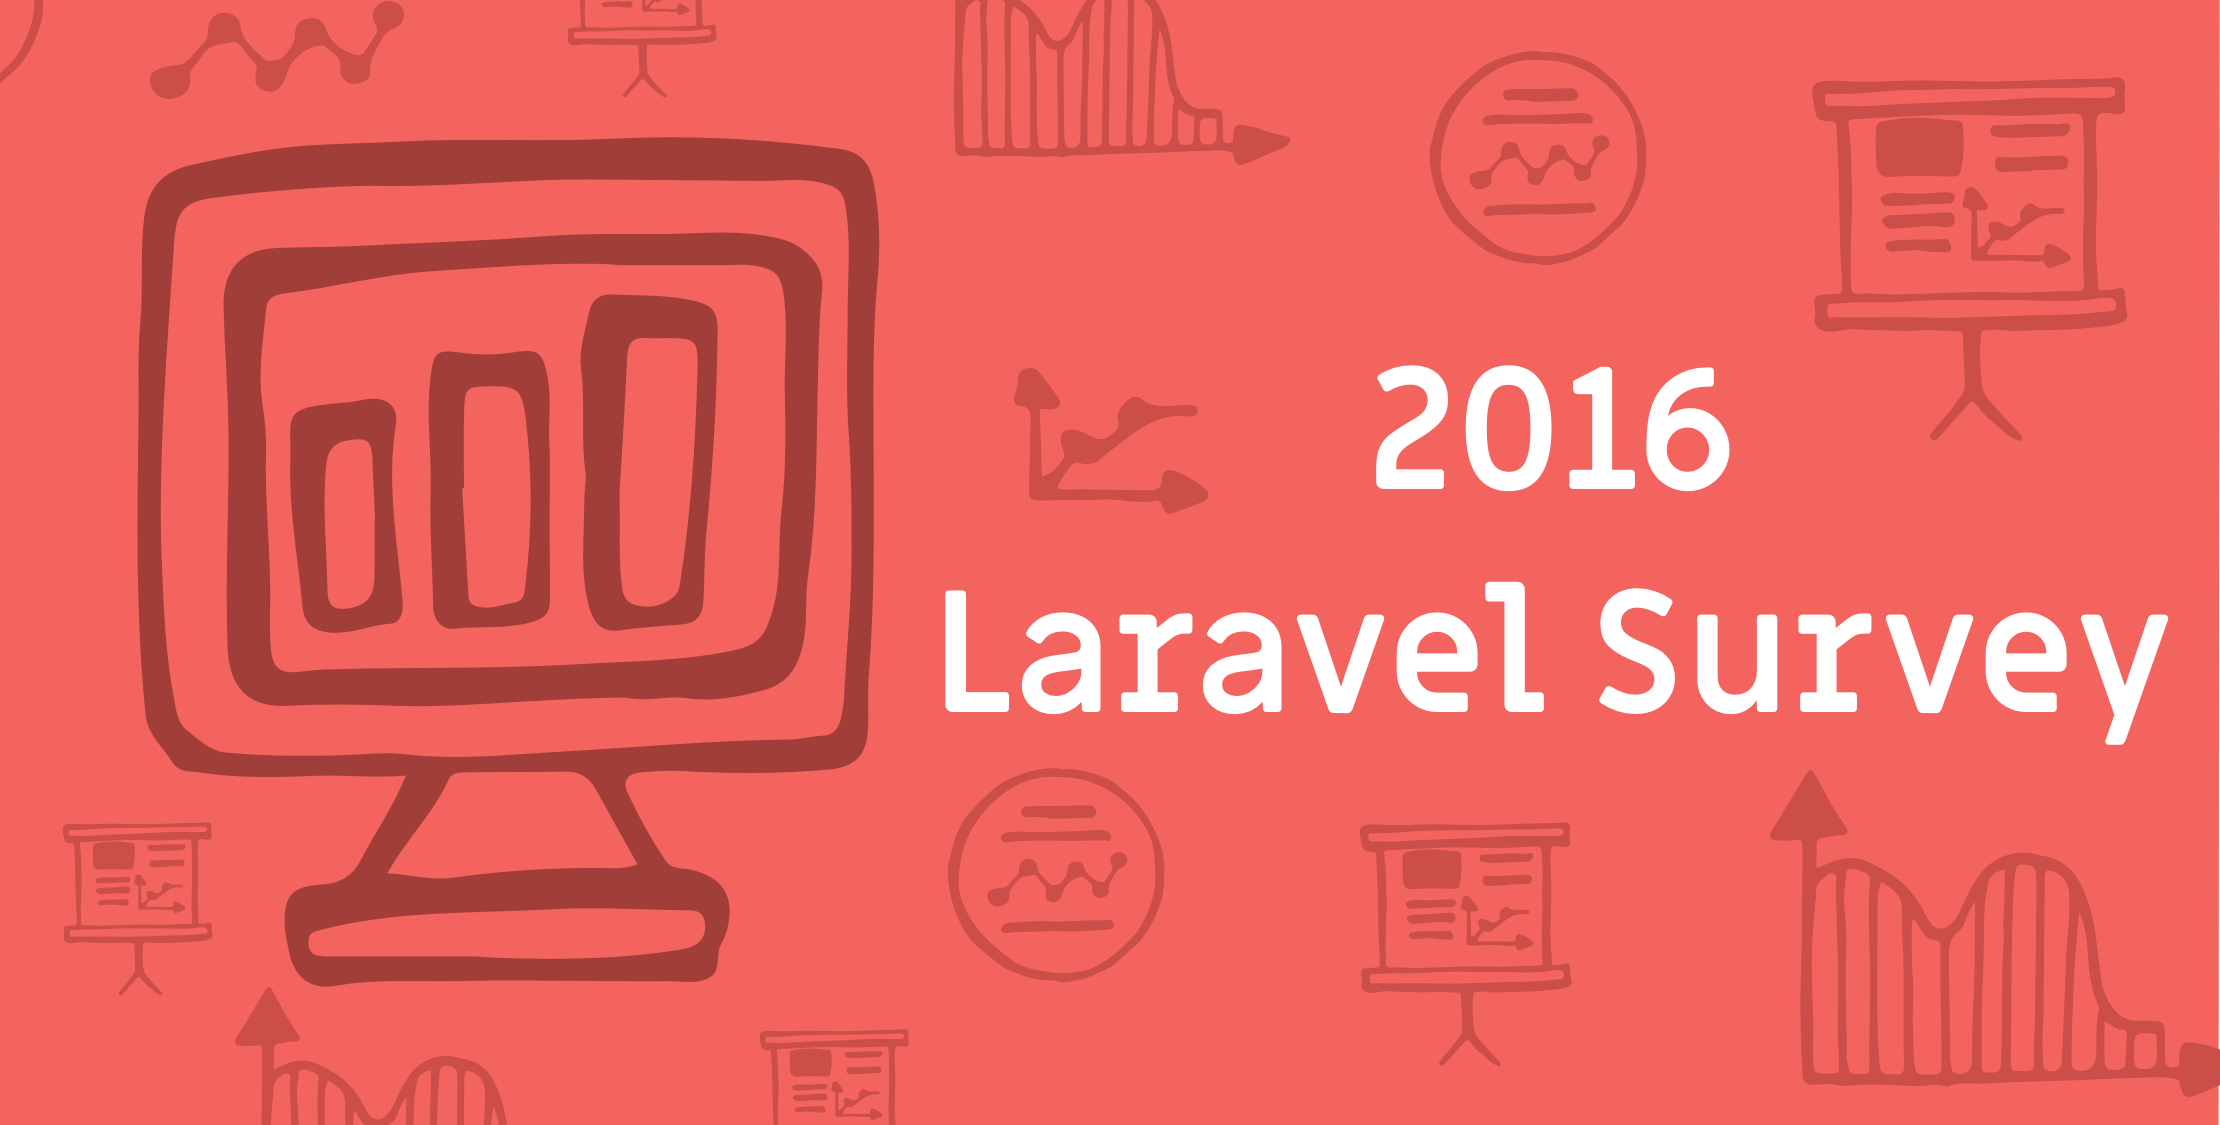 2016 Laravel Survey Results image